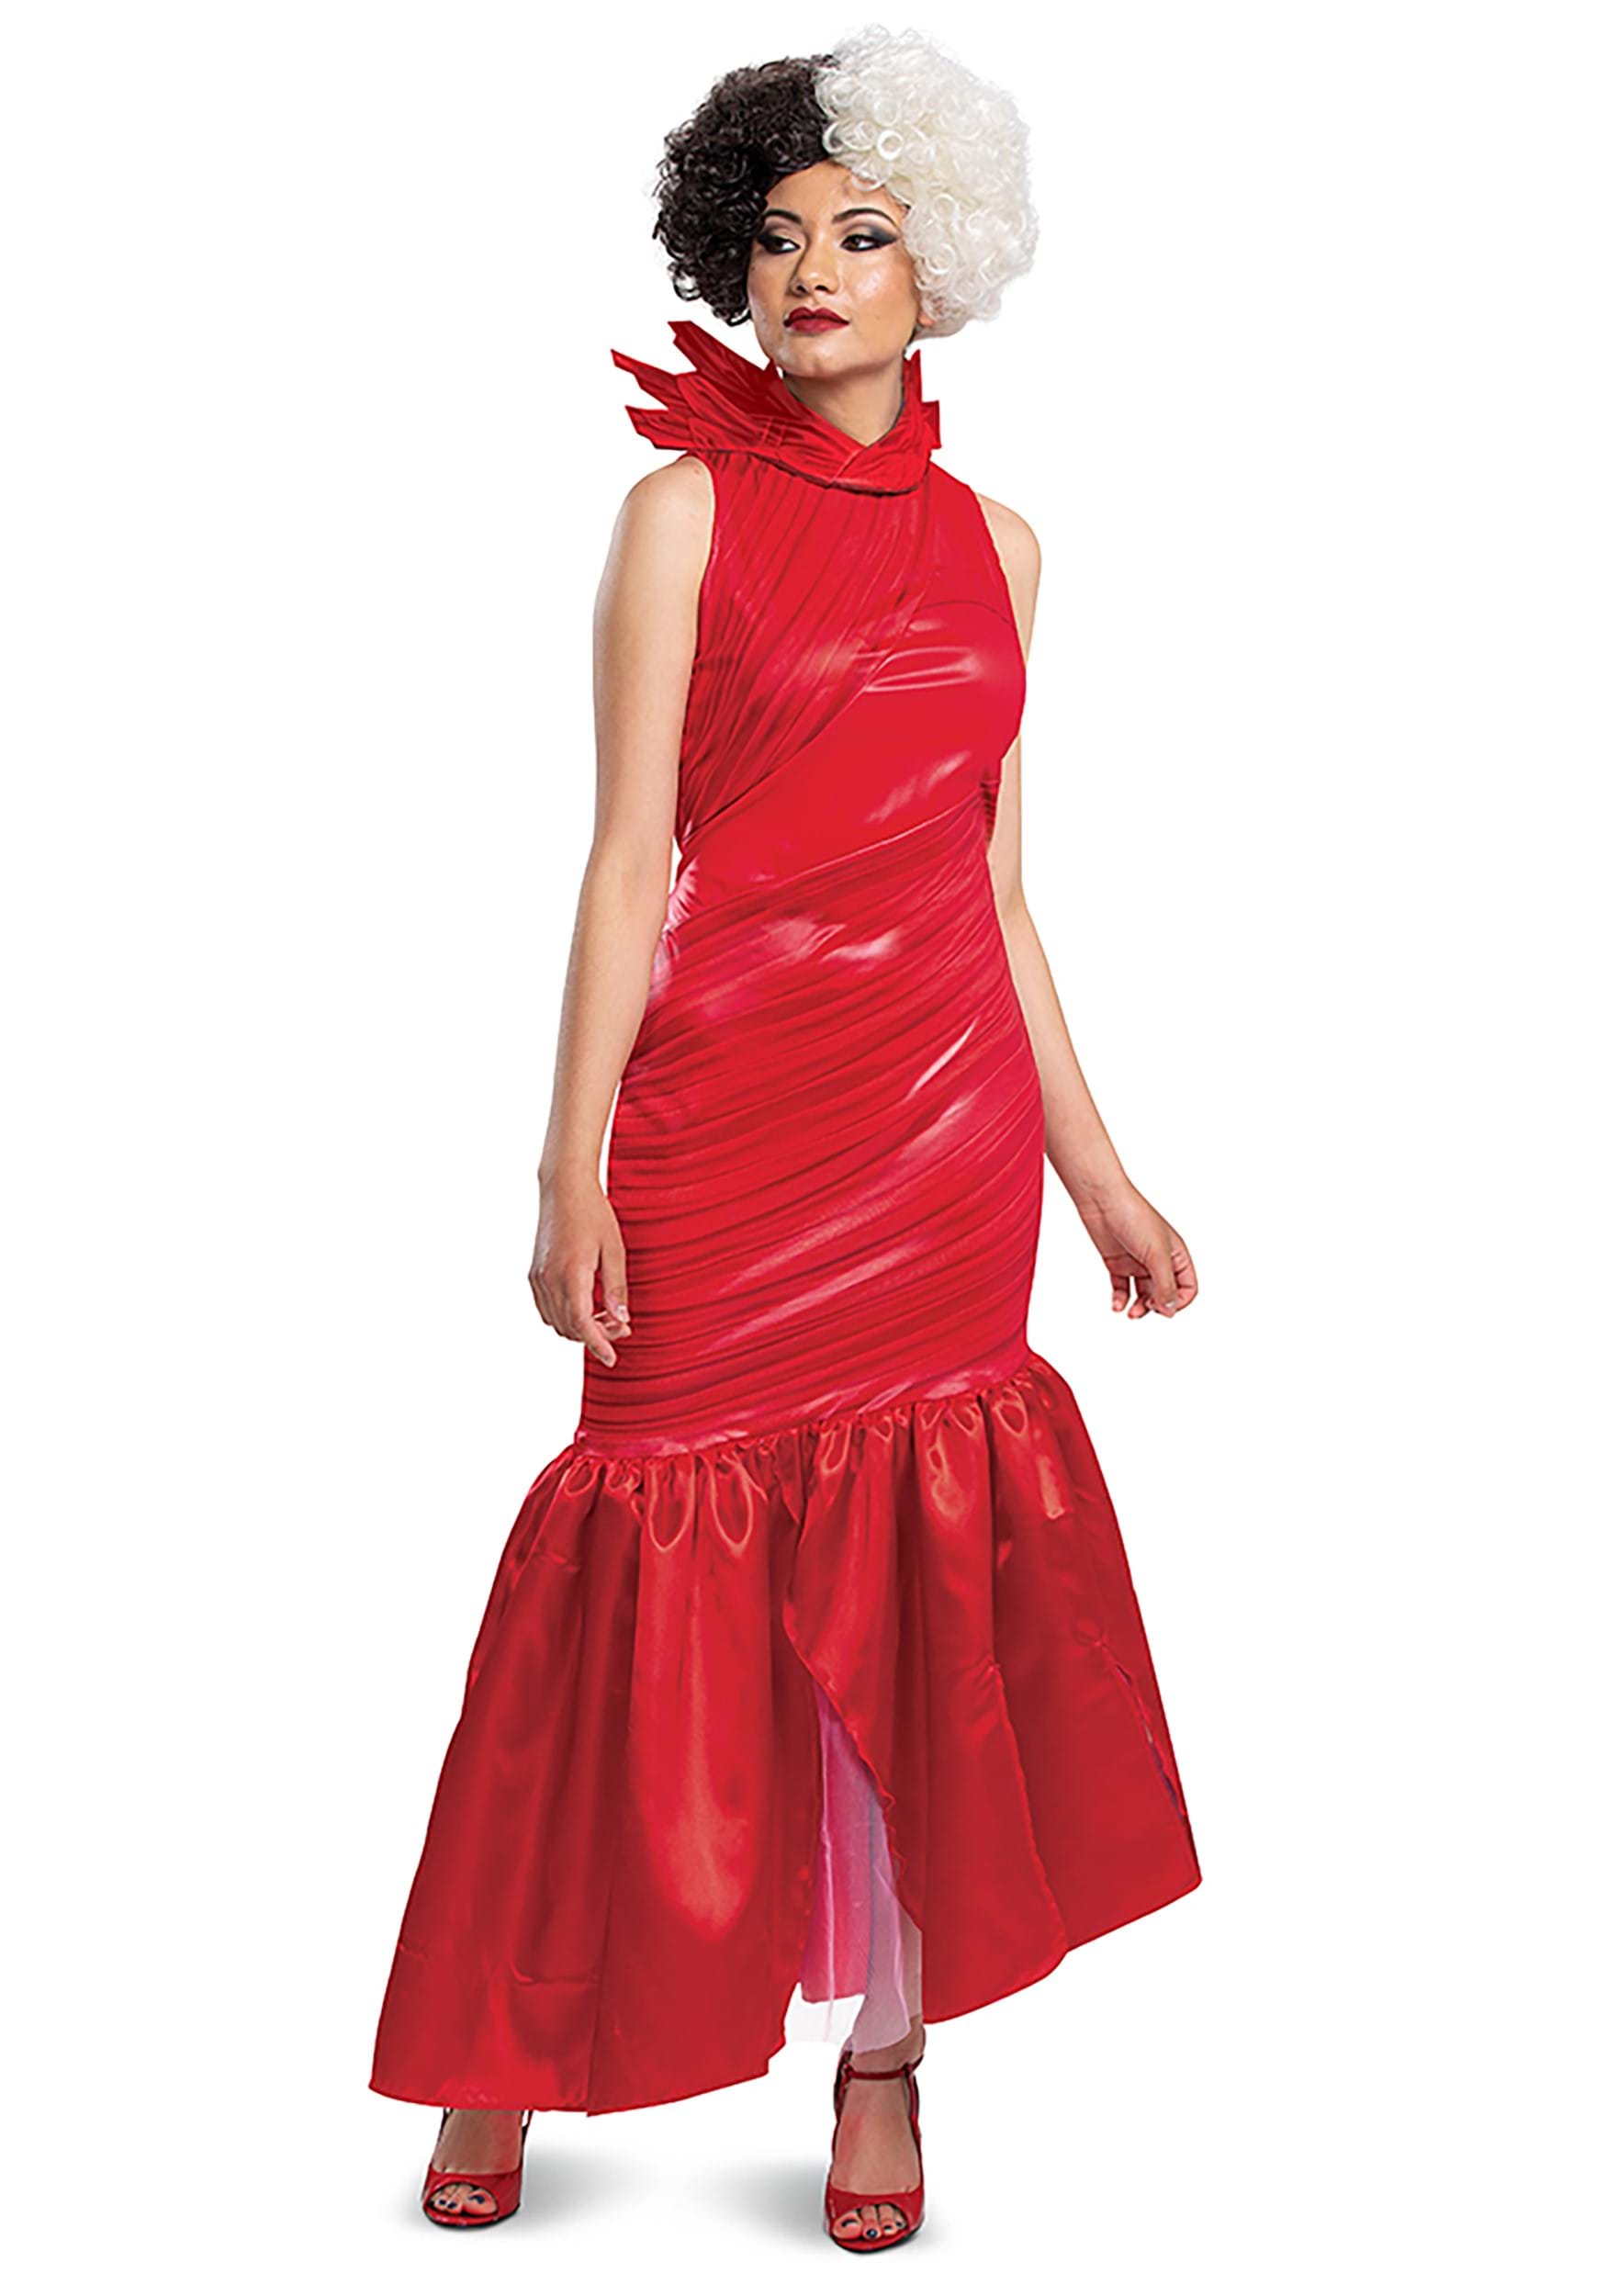 Image of Adult Cruella Red Dress Classic Costume ID DI118539-XL